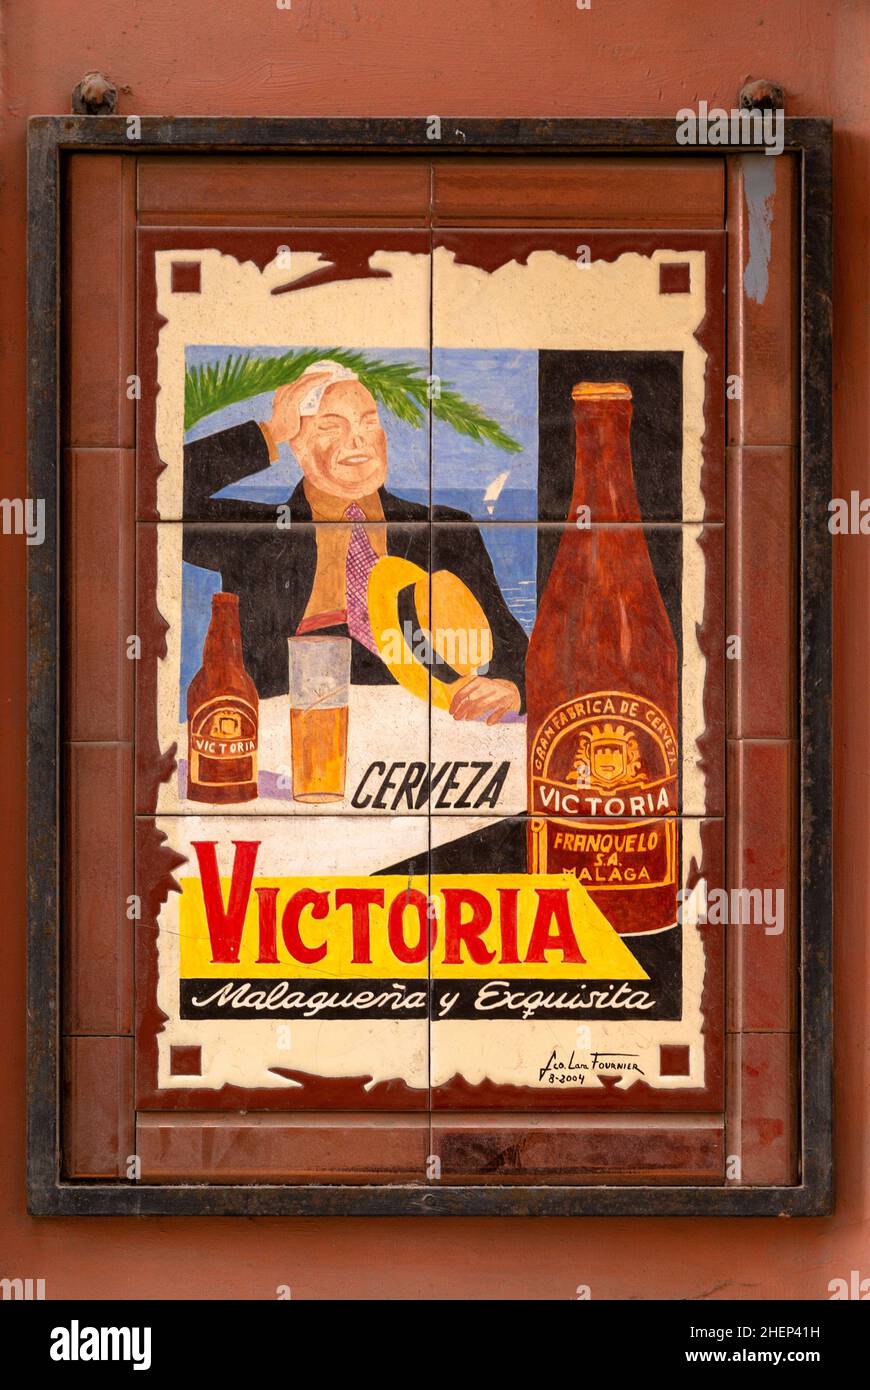 Ceramic tile advertising poster for Victoria beer brewed in Malaga, Spain - Cervezas Victoria Malagueña y exquisita Stock Photo